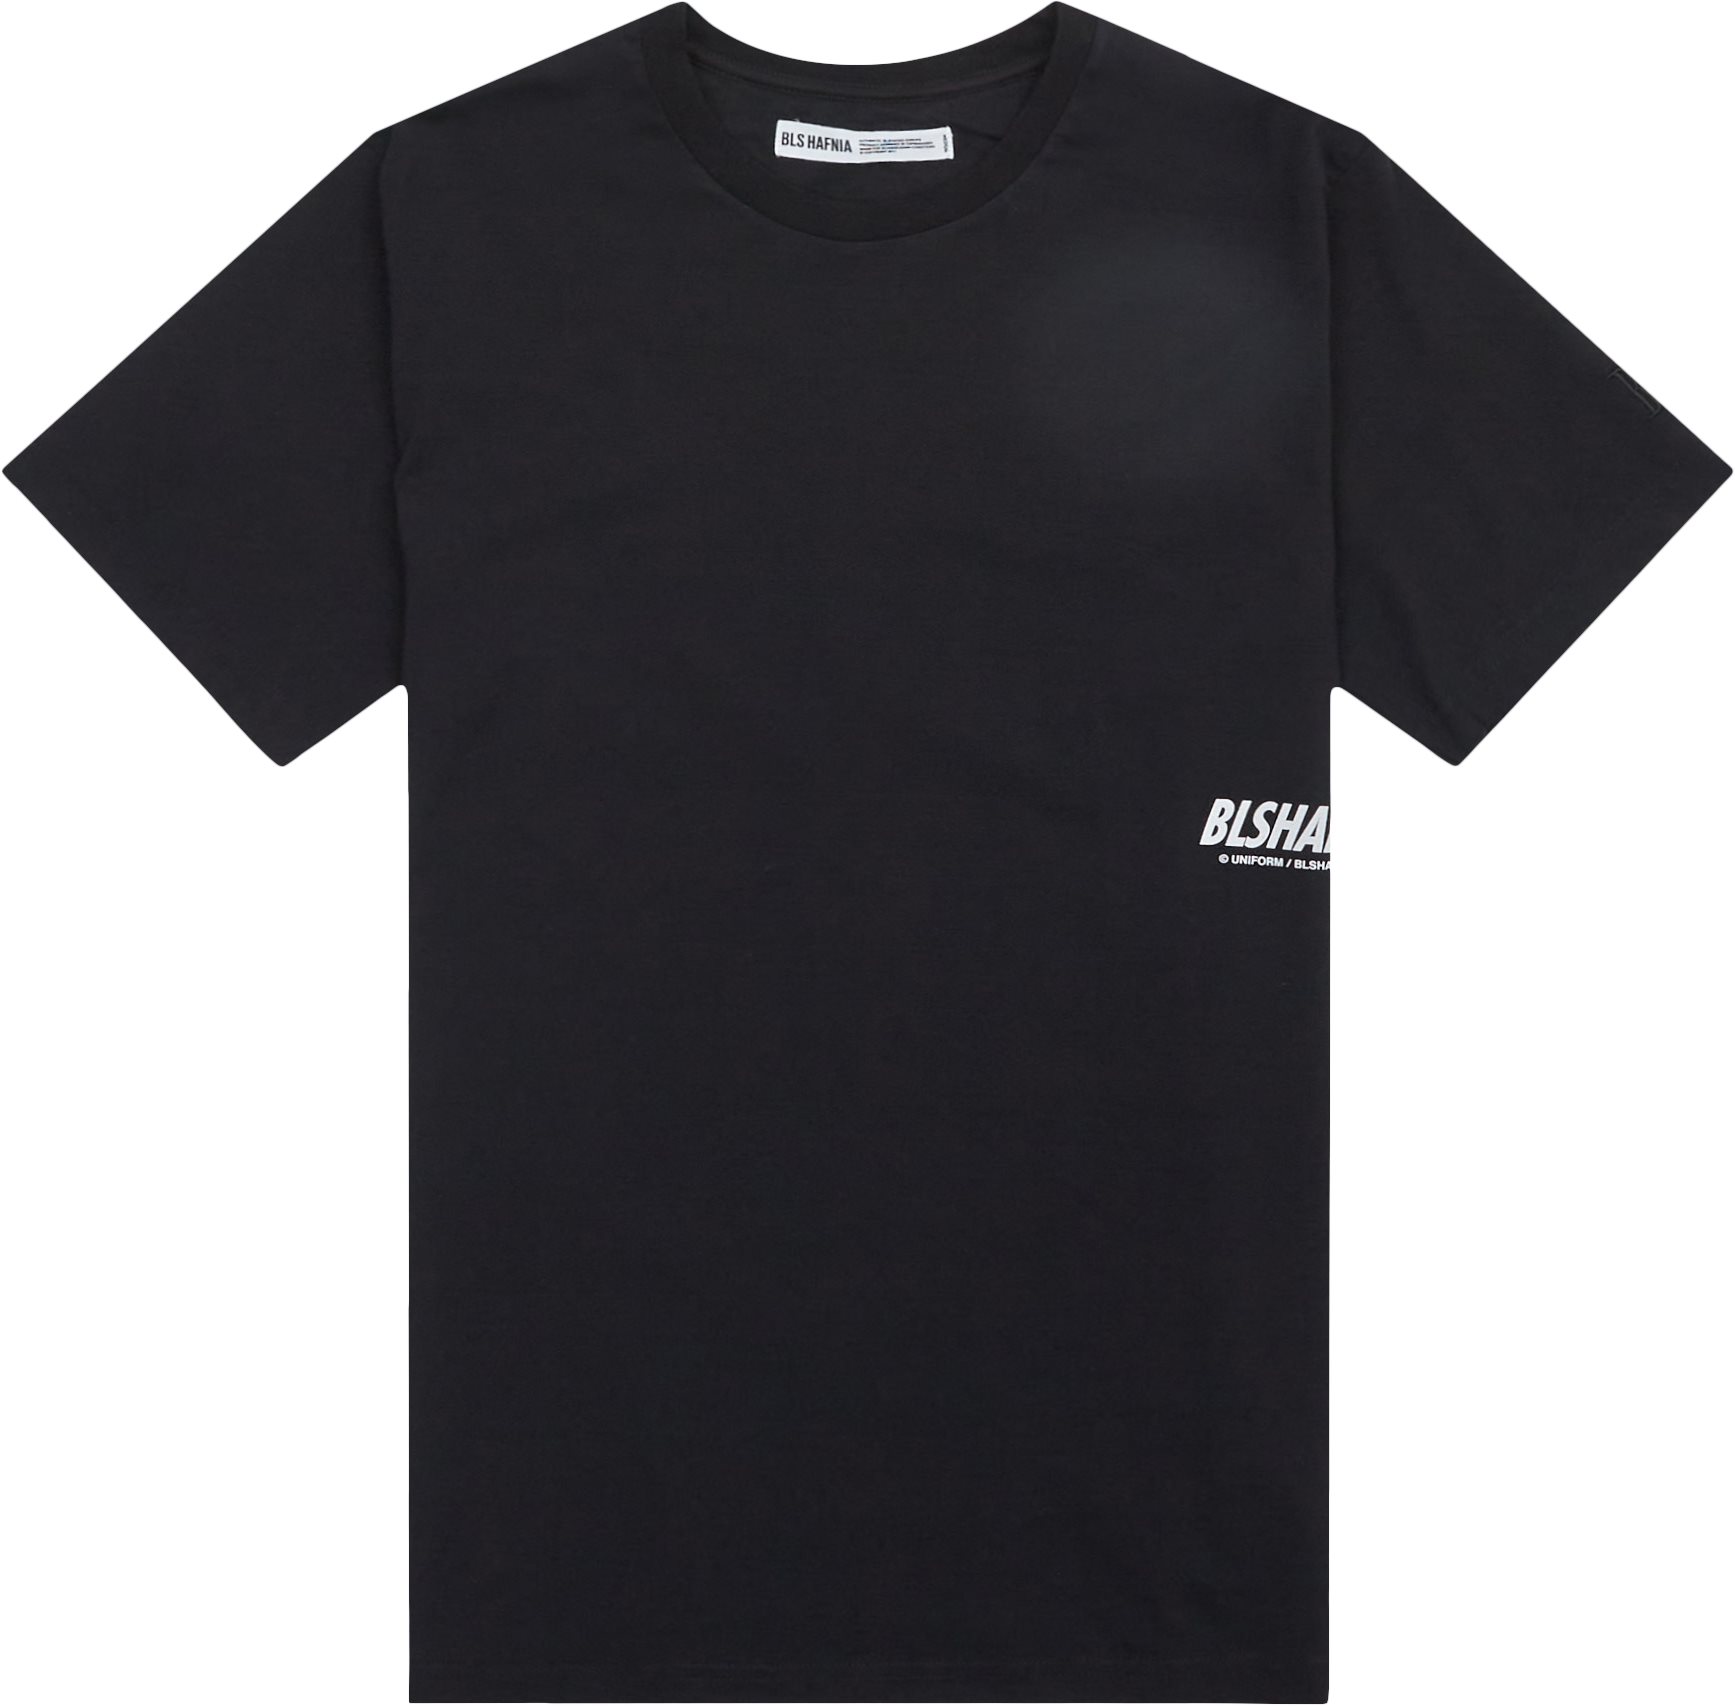 Swish Tee - T-shirts - Regular fit - Black